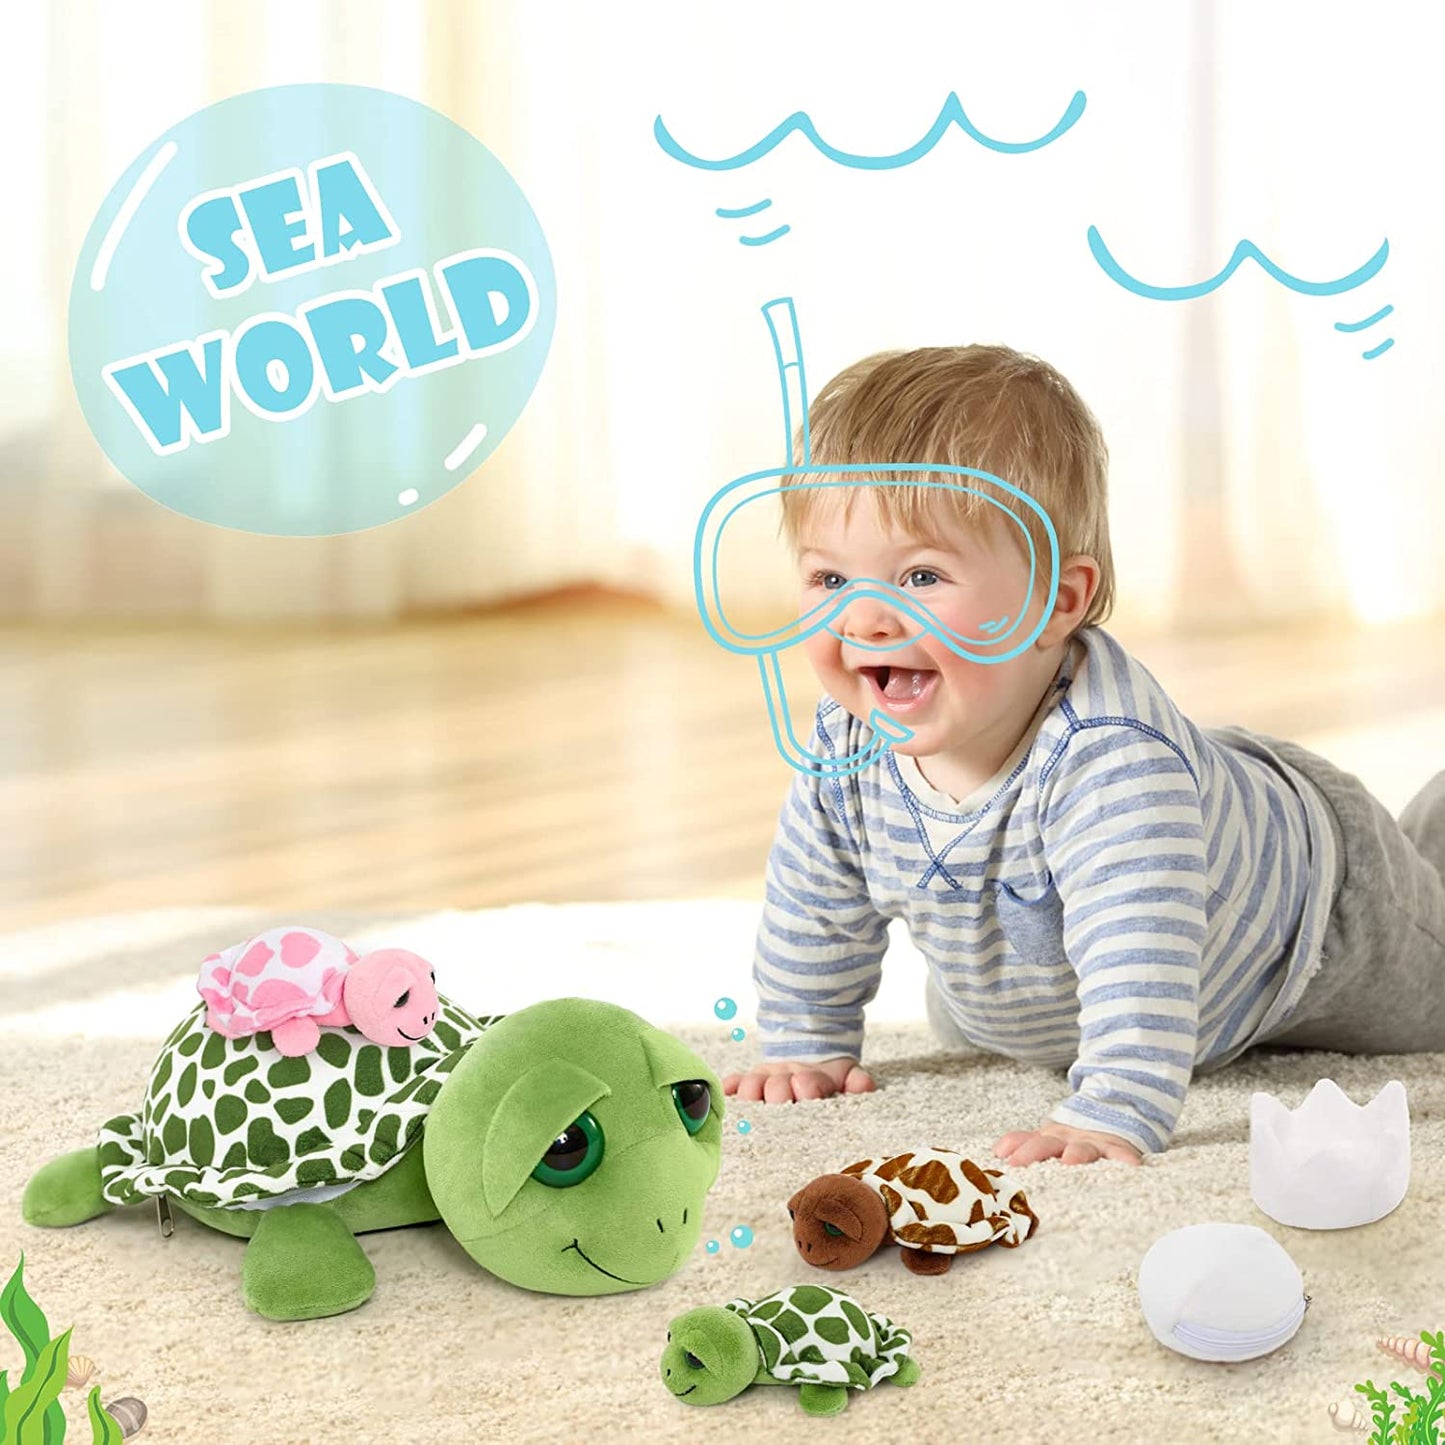 Cute Sea Turtle Stuffed Toy Set, 14 Inches - MorisMos Stuffed Animals